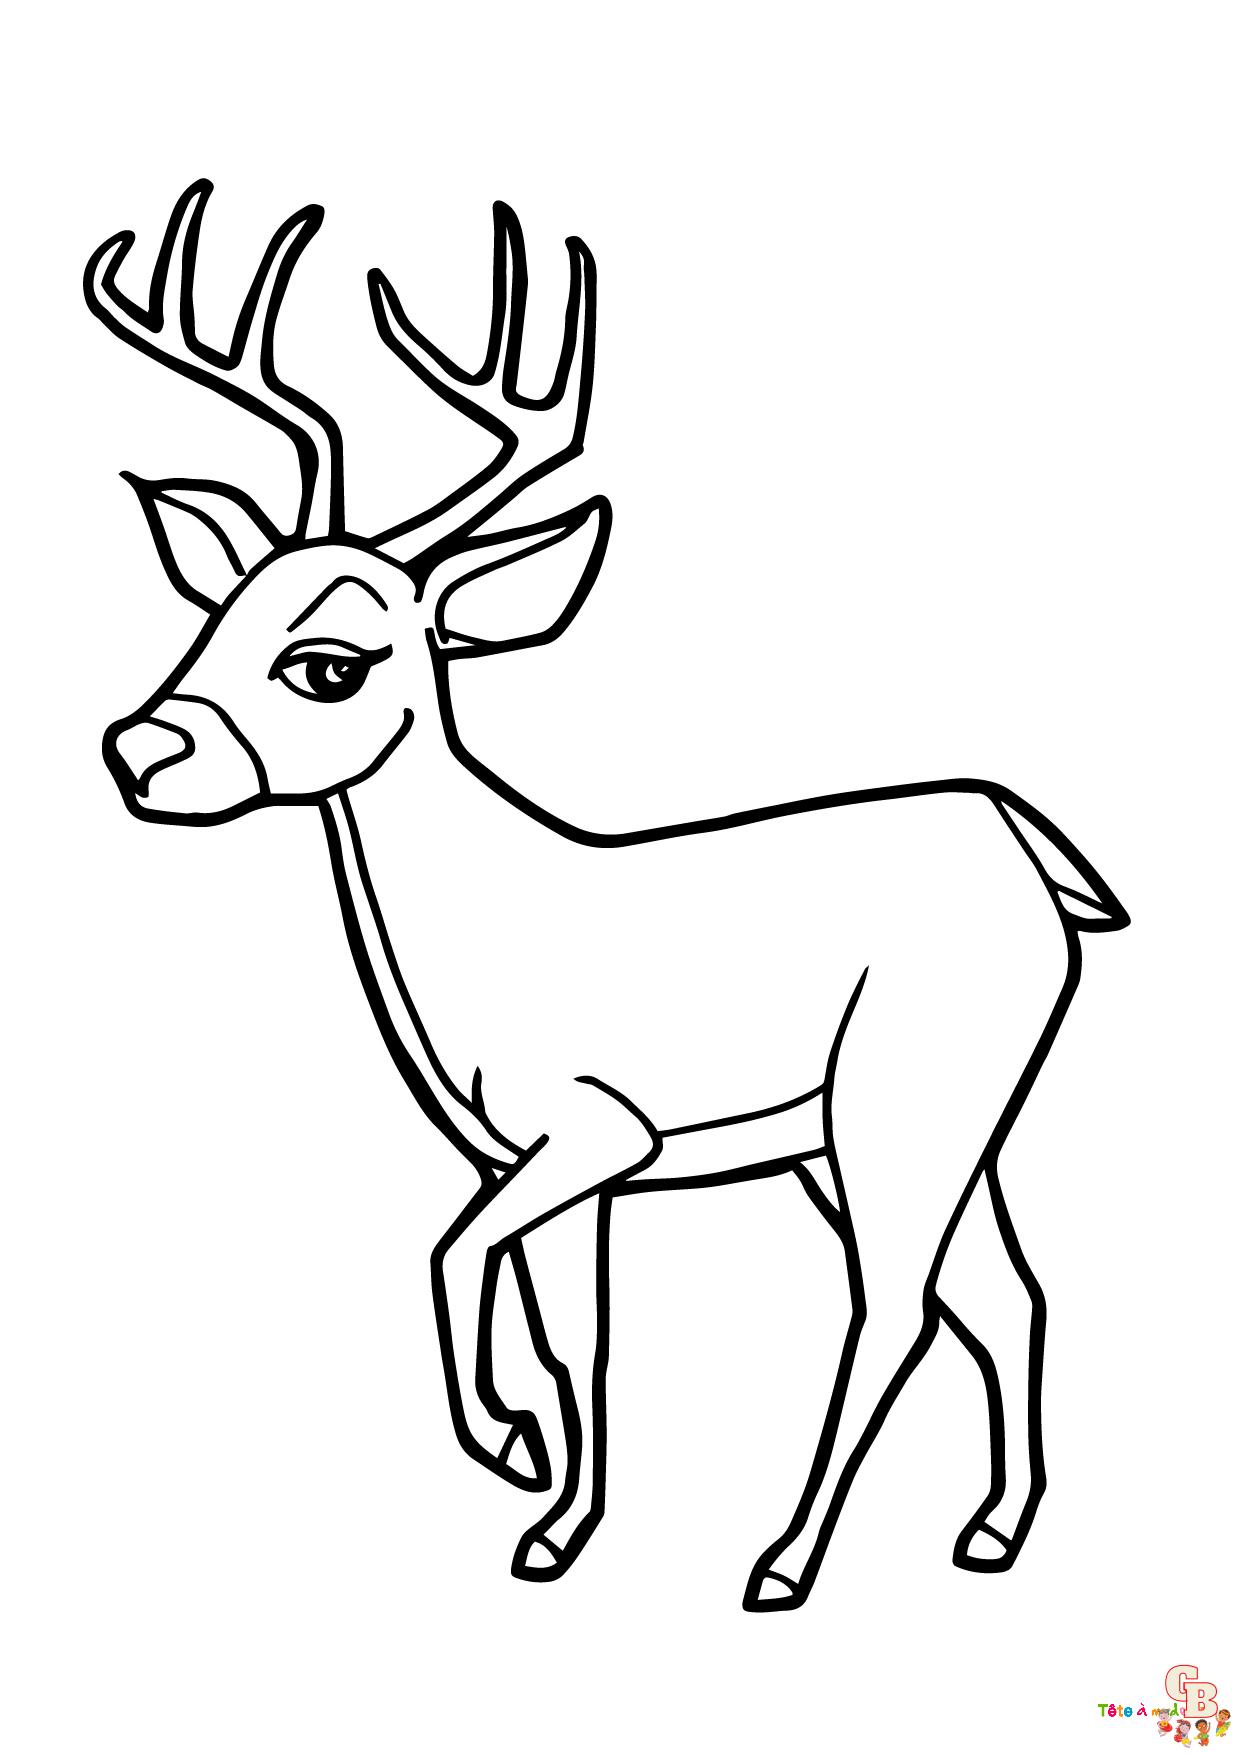 Adorable cute deer coloring page